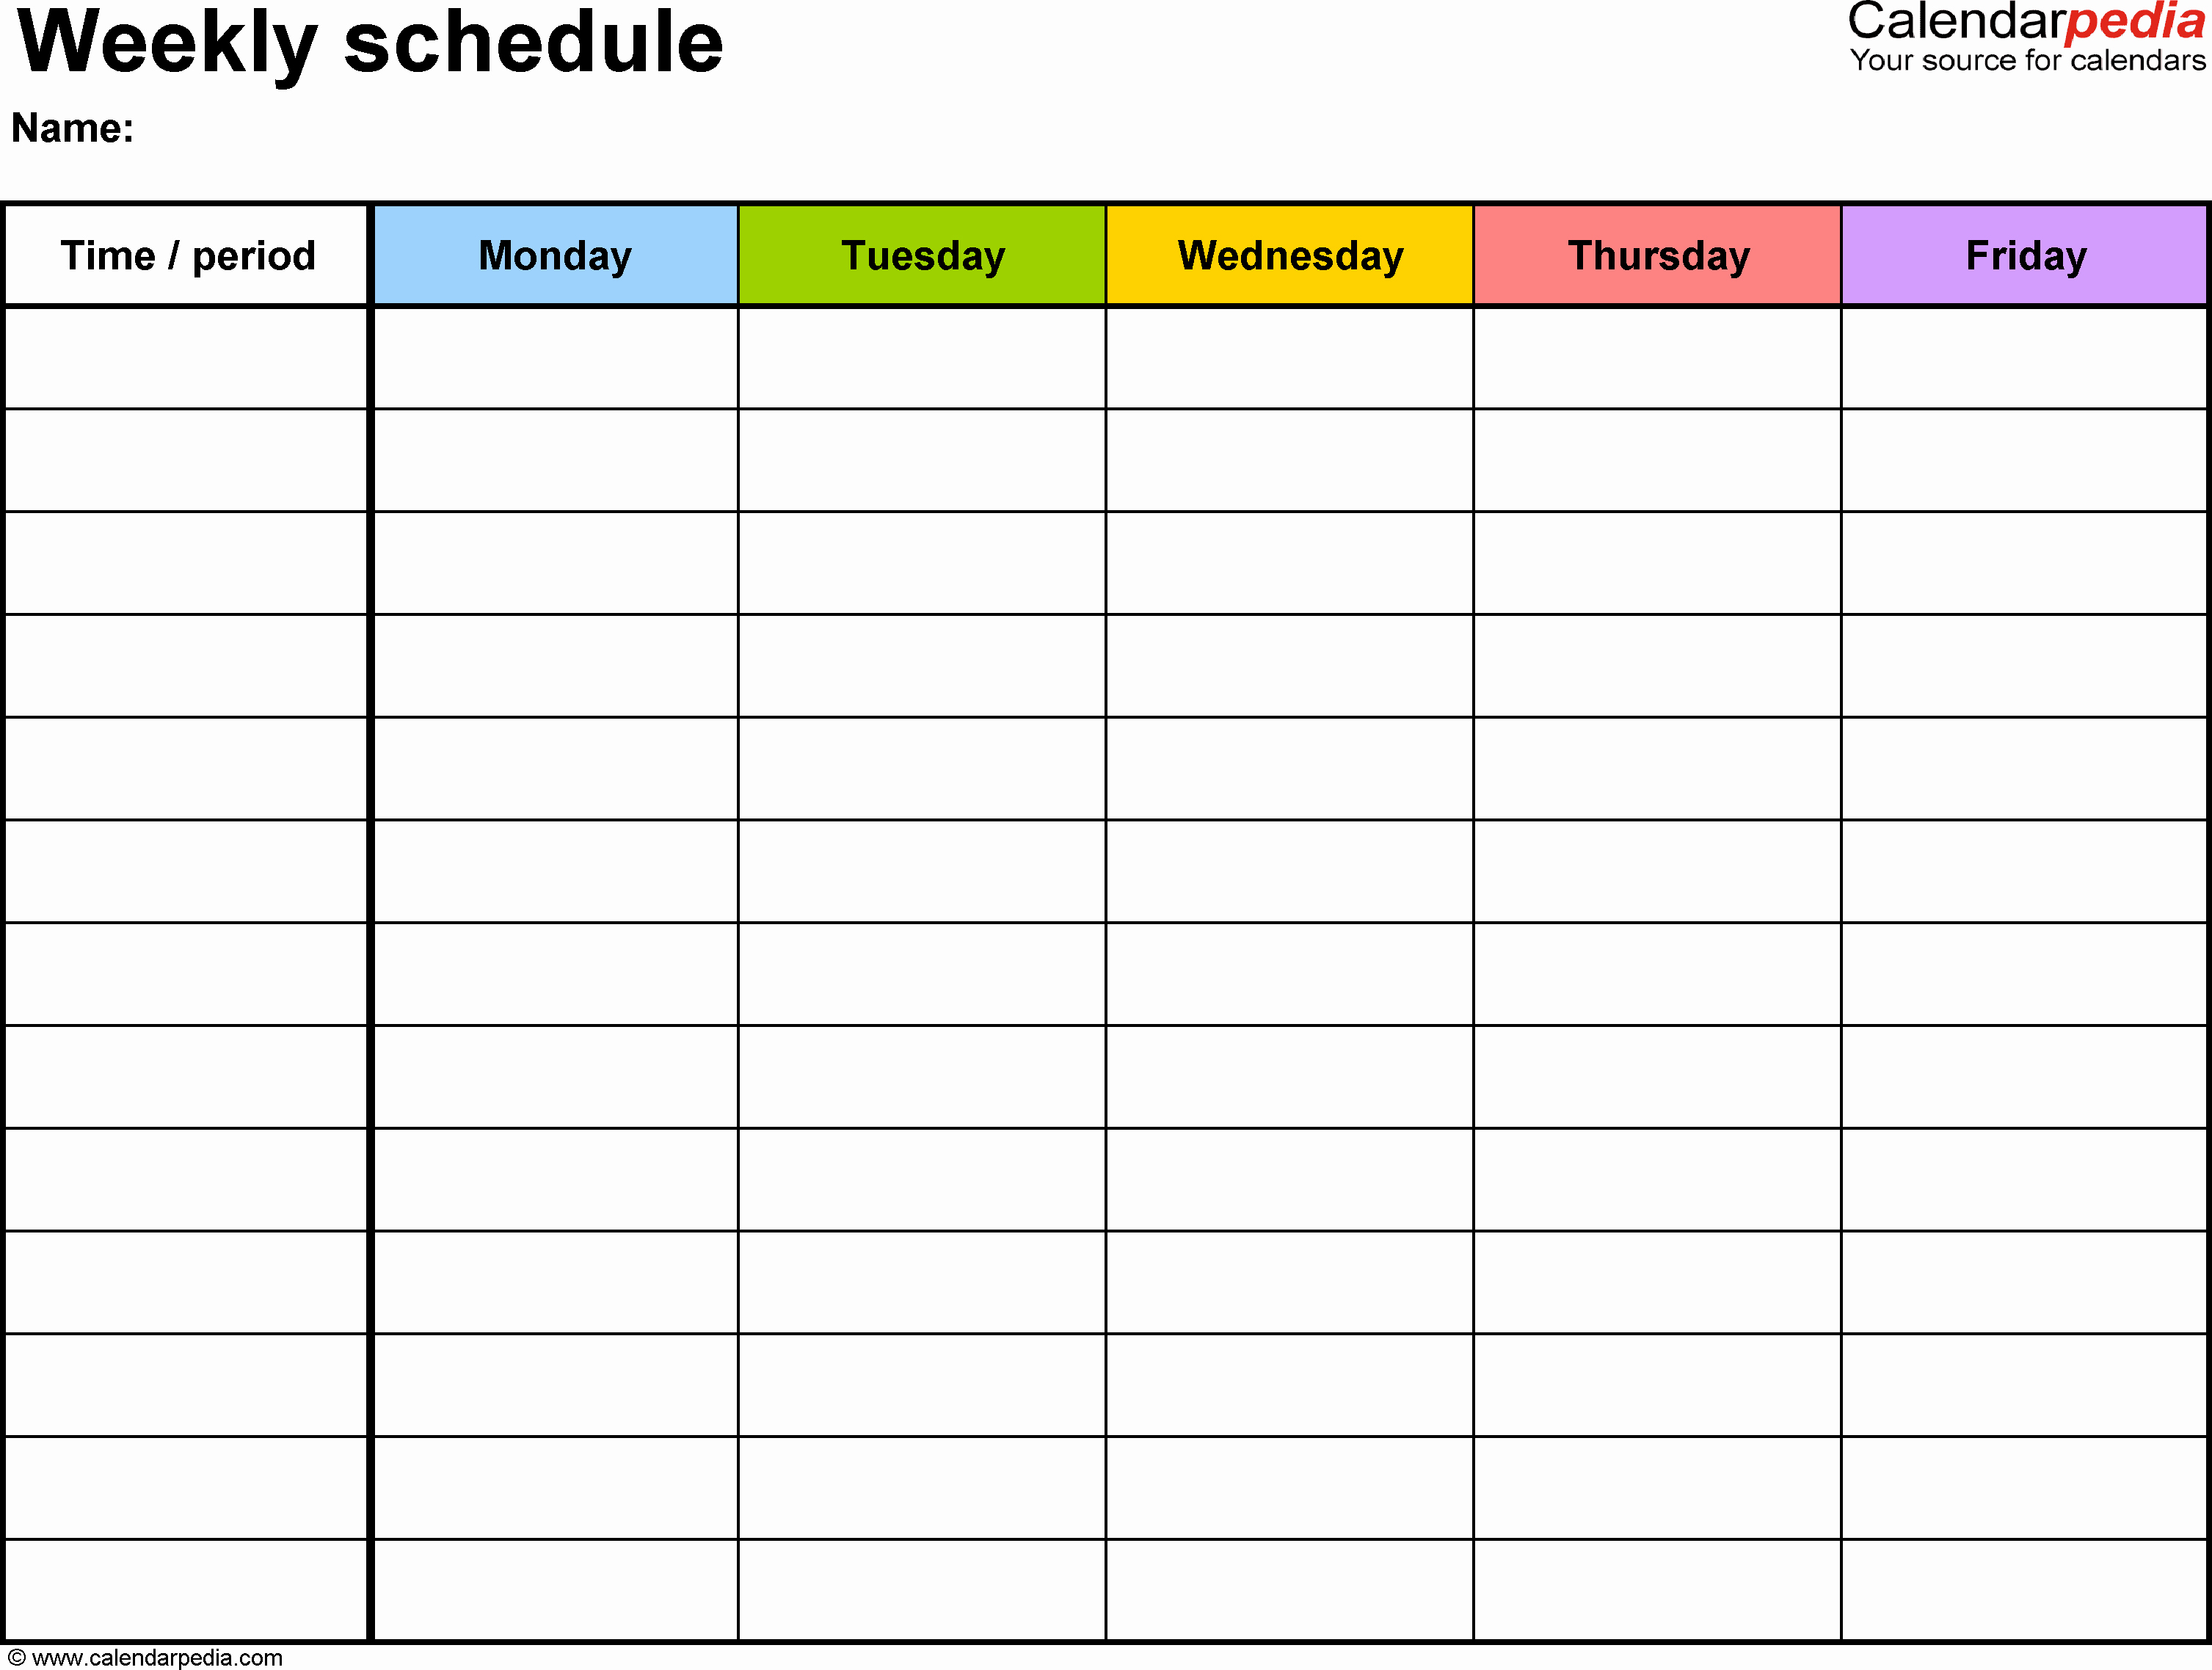 One Week Schedule Template Lovely Free Weekly Schedule Templates for Word 18 Templates